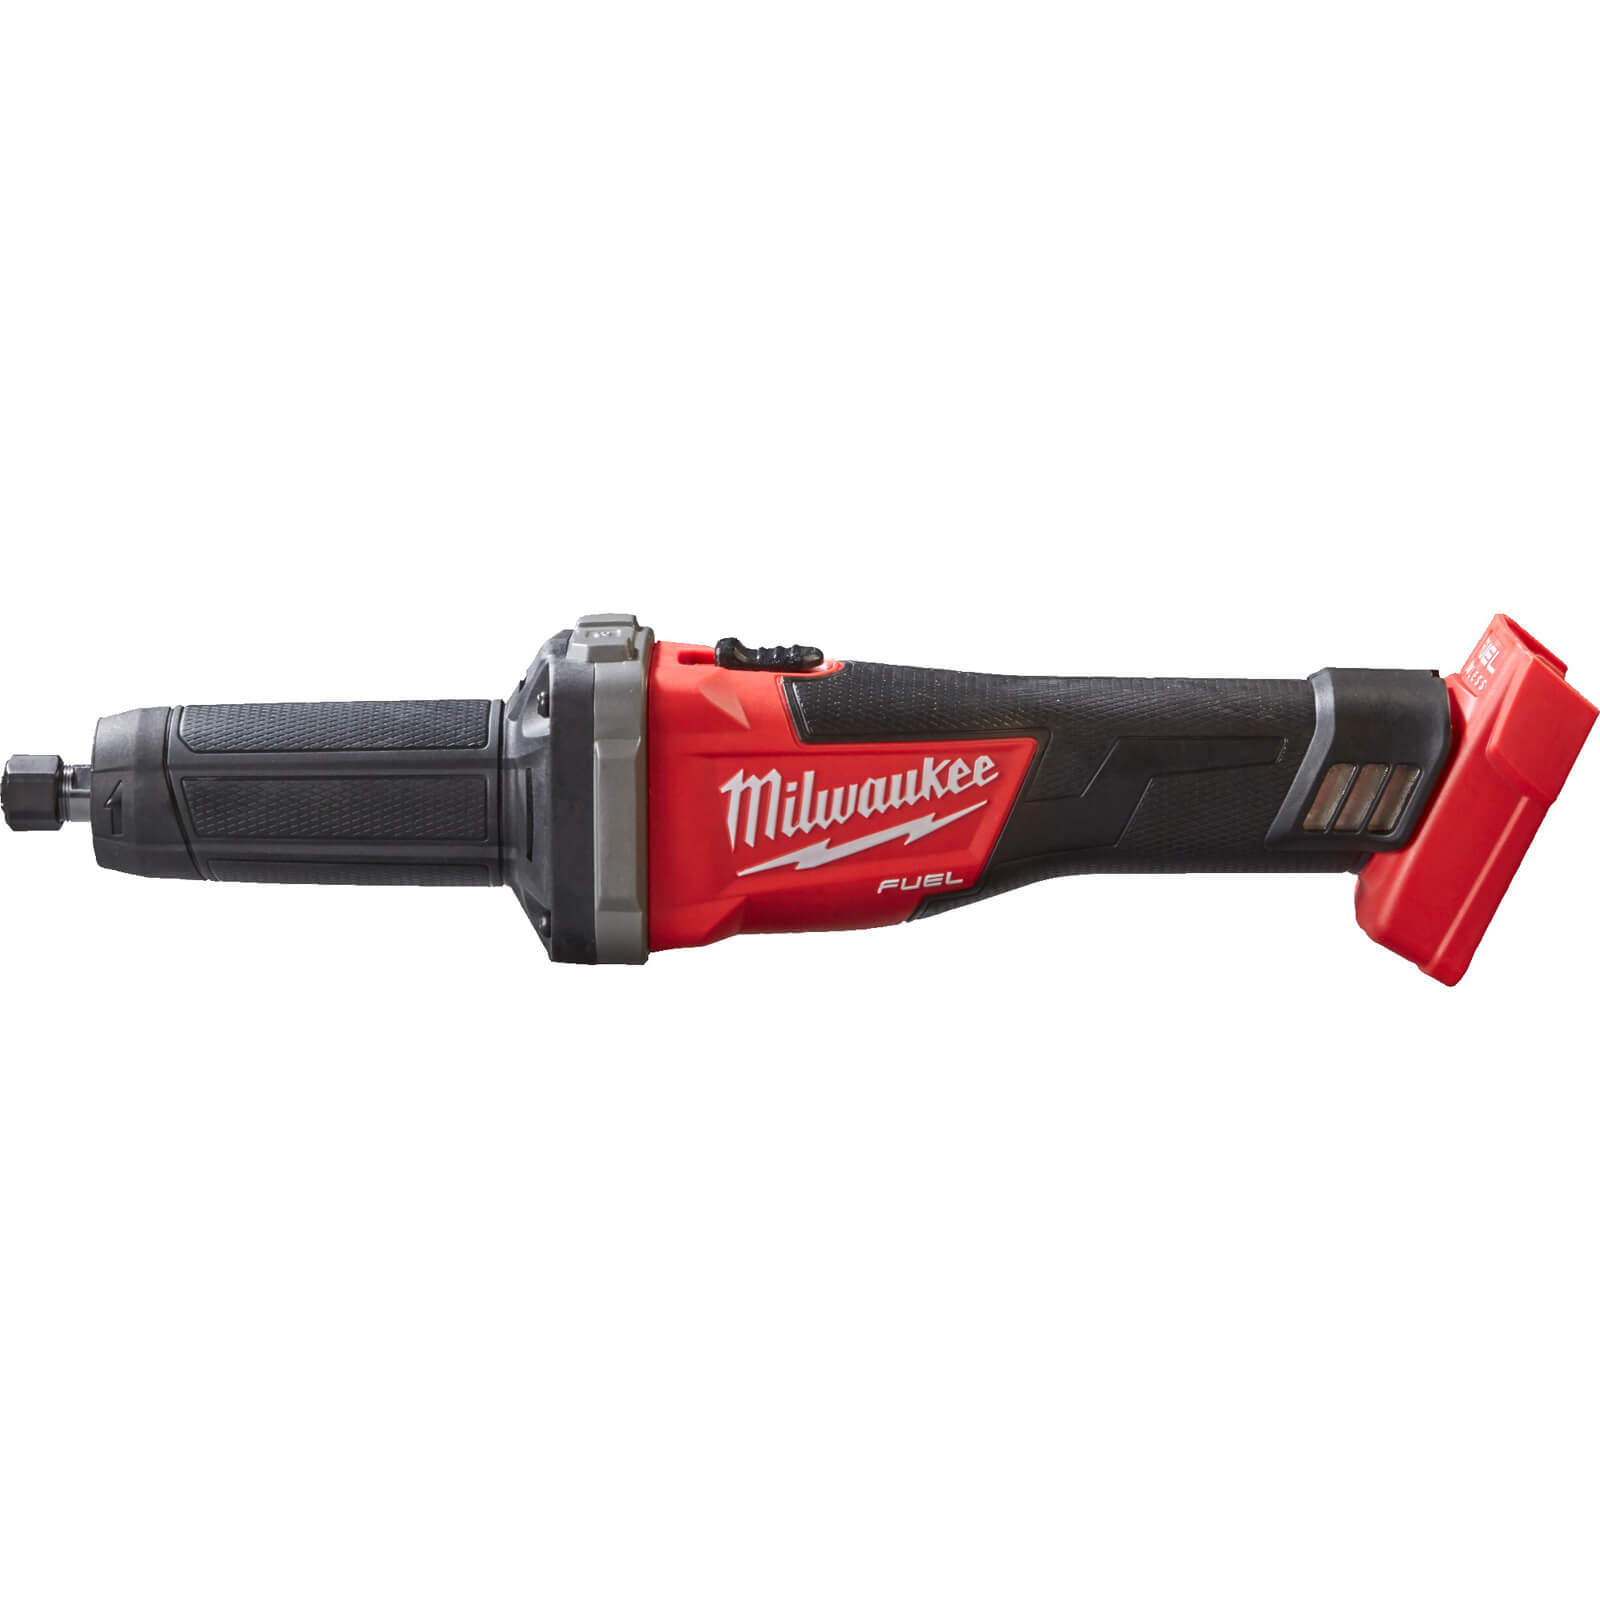 Milwaukee M18 FDG Fuel 18v Cordless Brushless Die Grinder No Batteries No Charger No Case